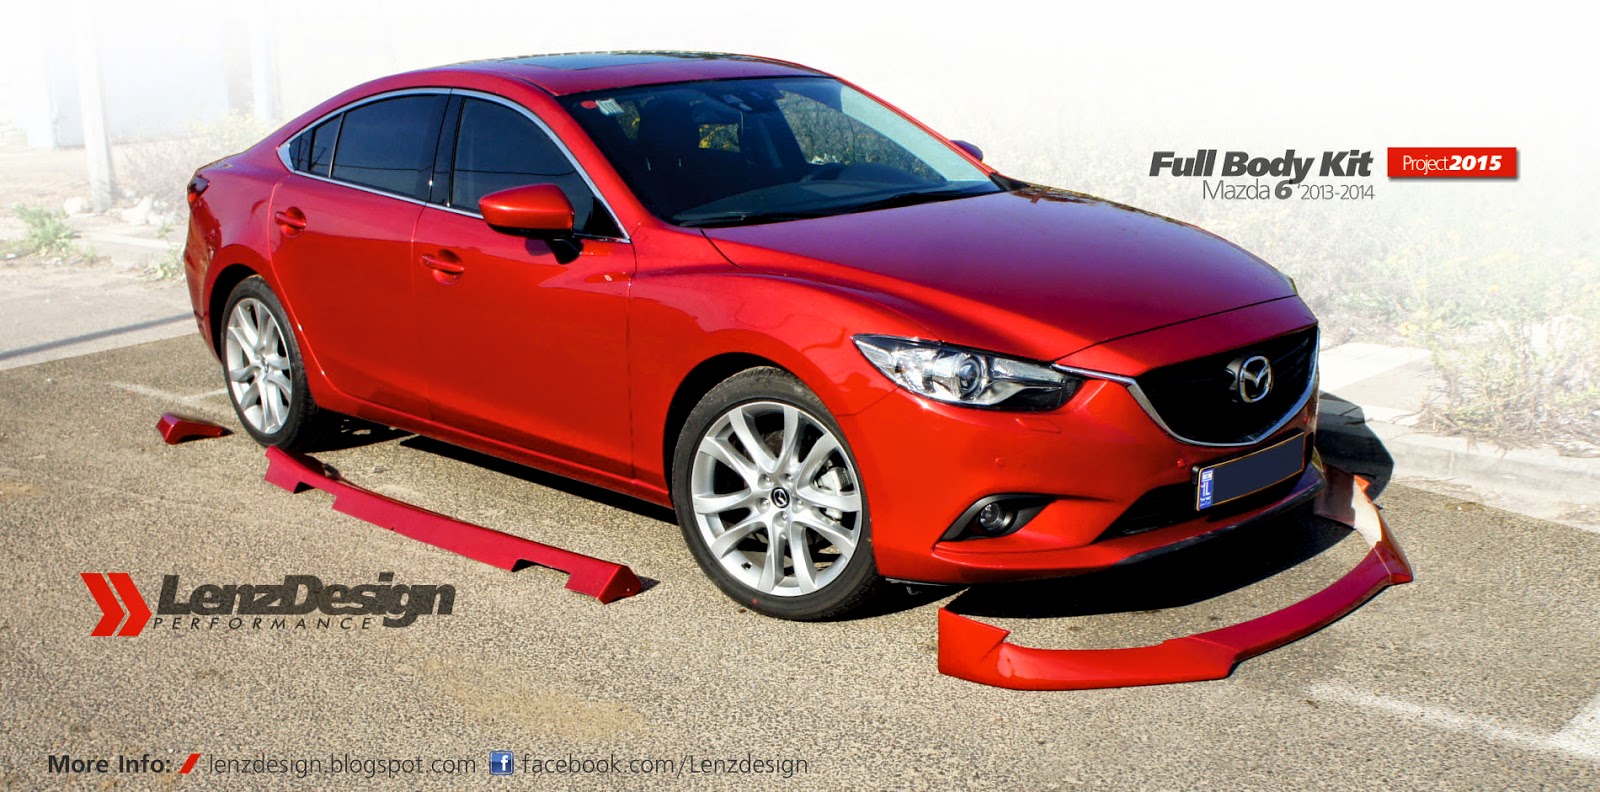 Lenzdesign Performance | Custom Body Kit & Carbon Fiber Parts: Mazda 6